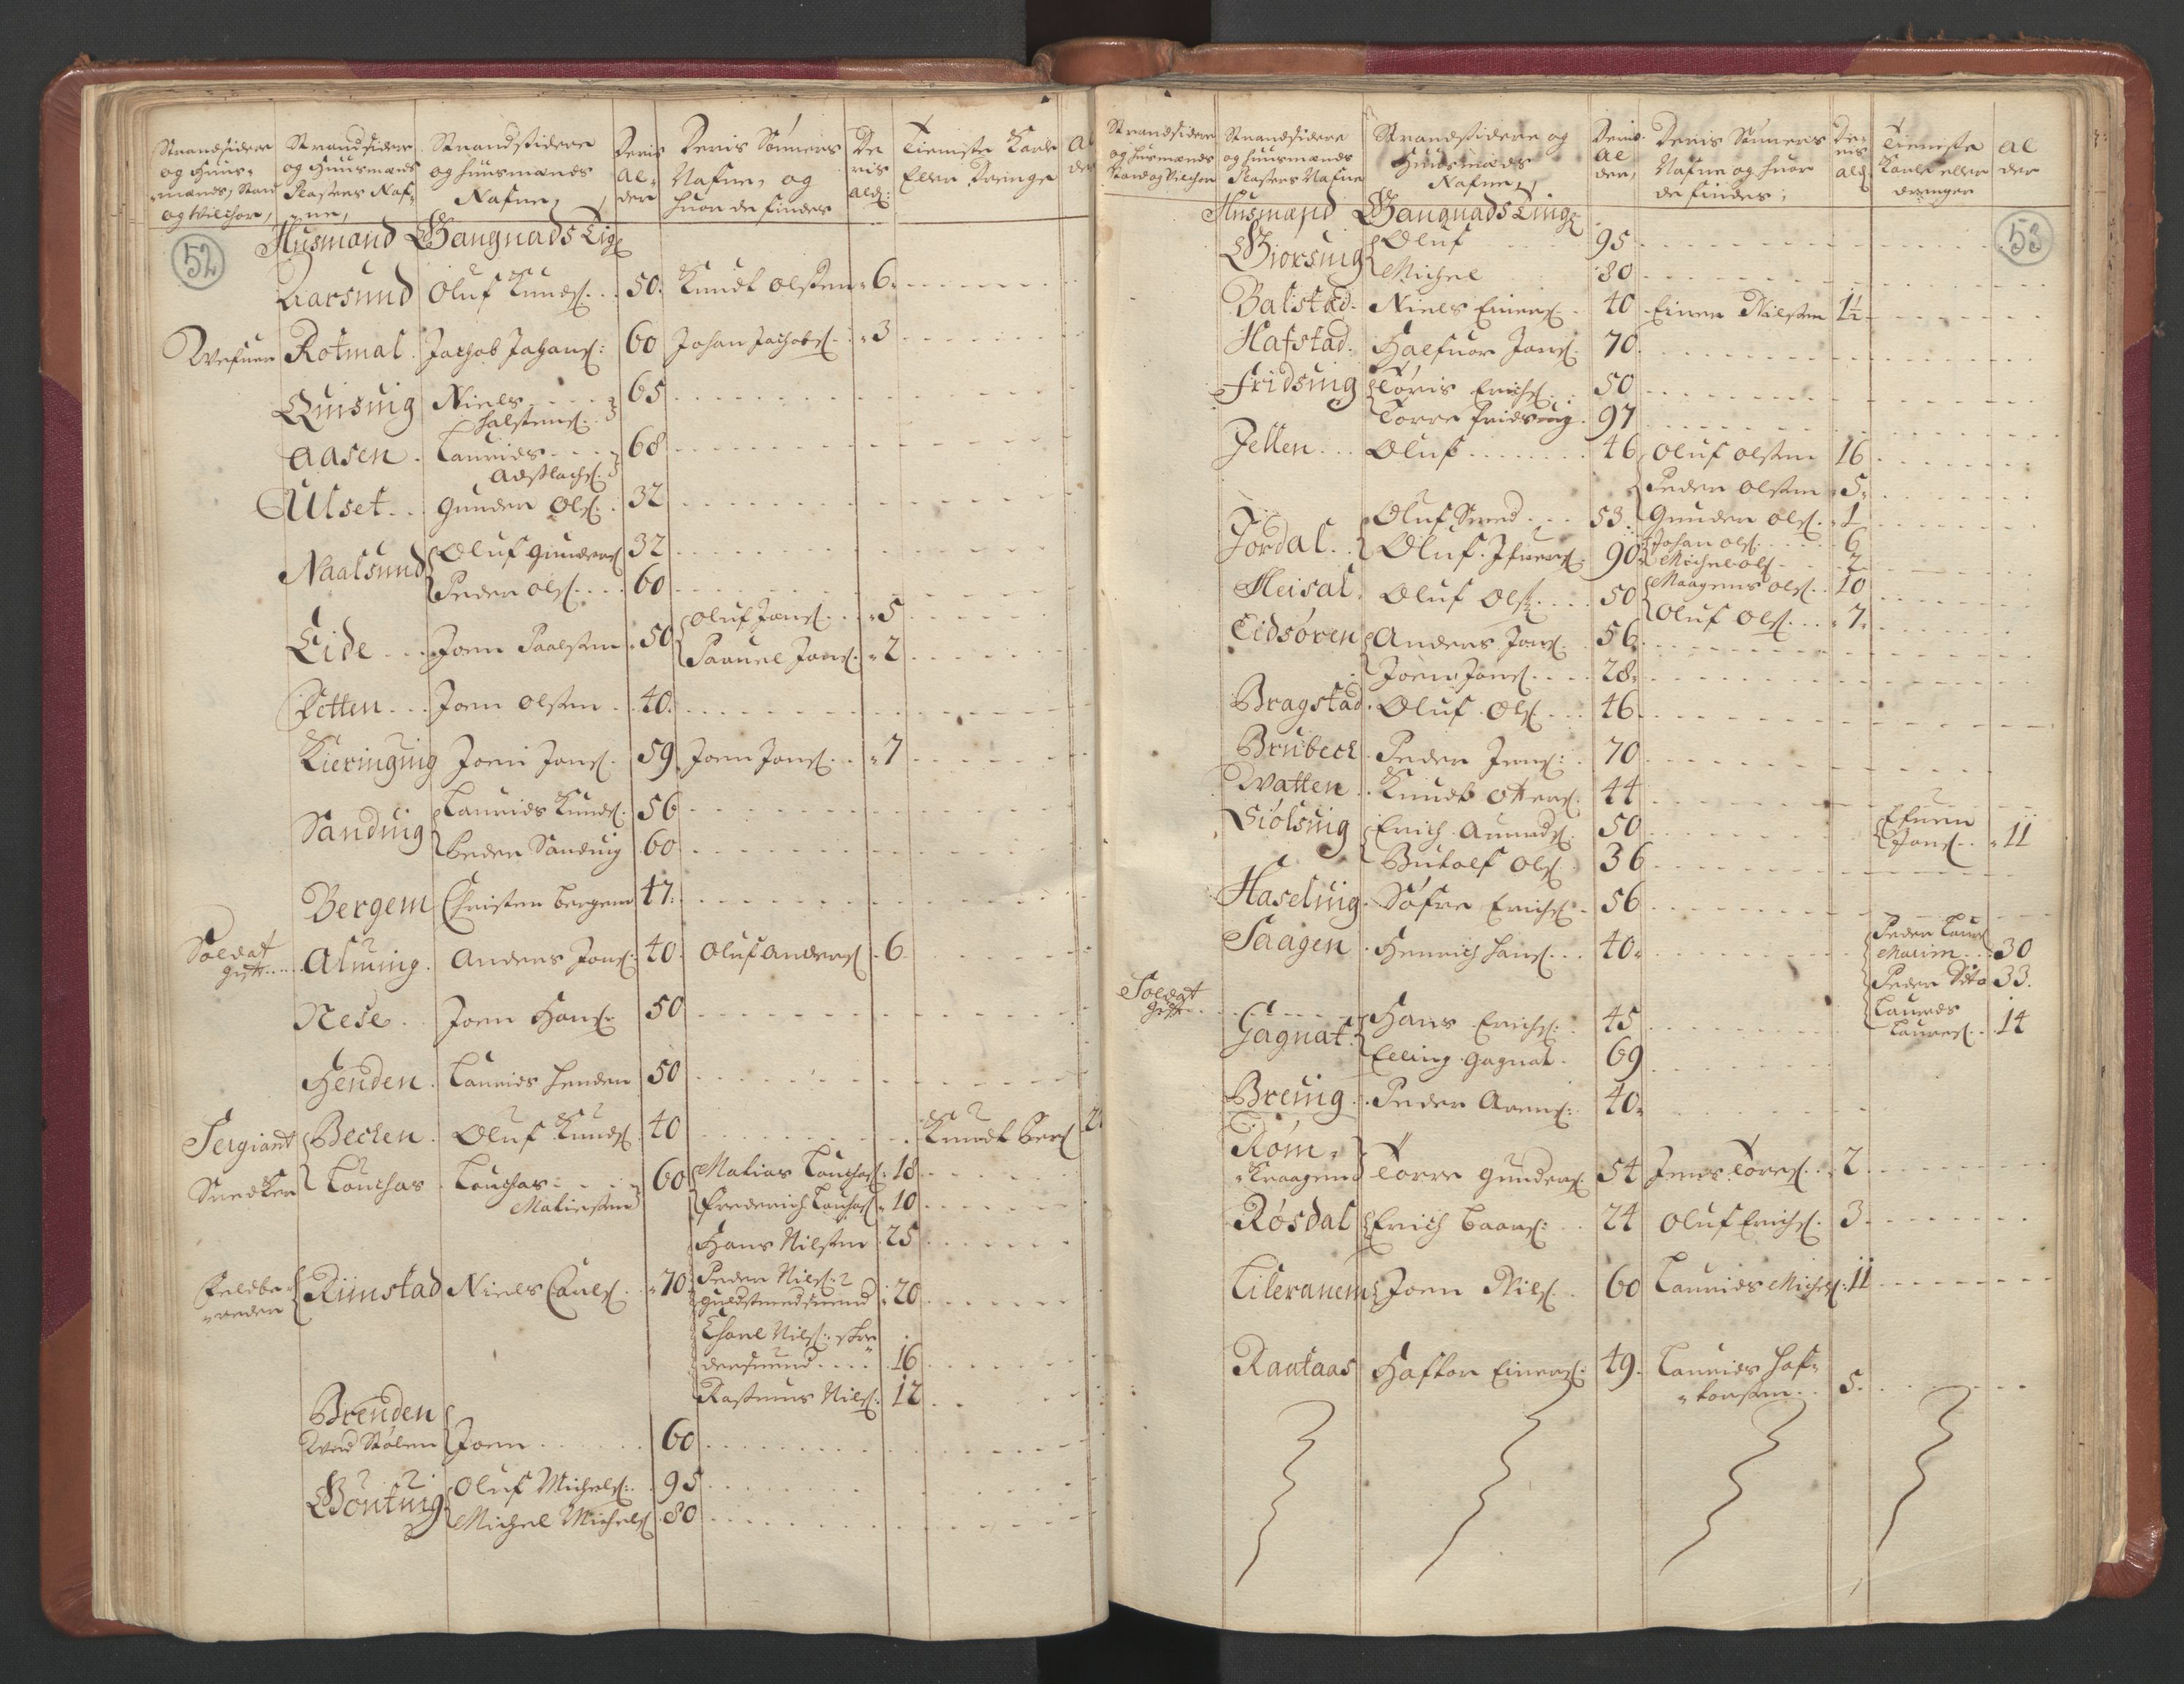 RA, Census (manntall) 1701, no. 11: Nordmøre fogderi and Romsdal fogderi, 1701, p. 52-53